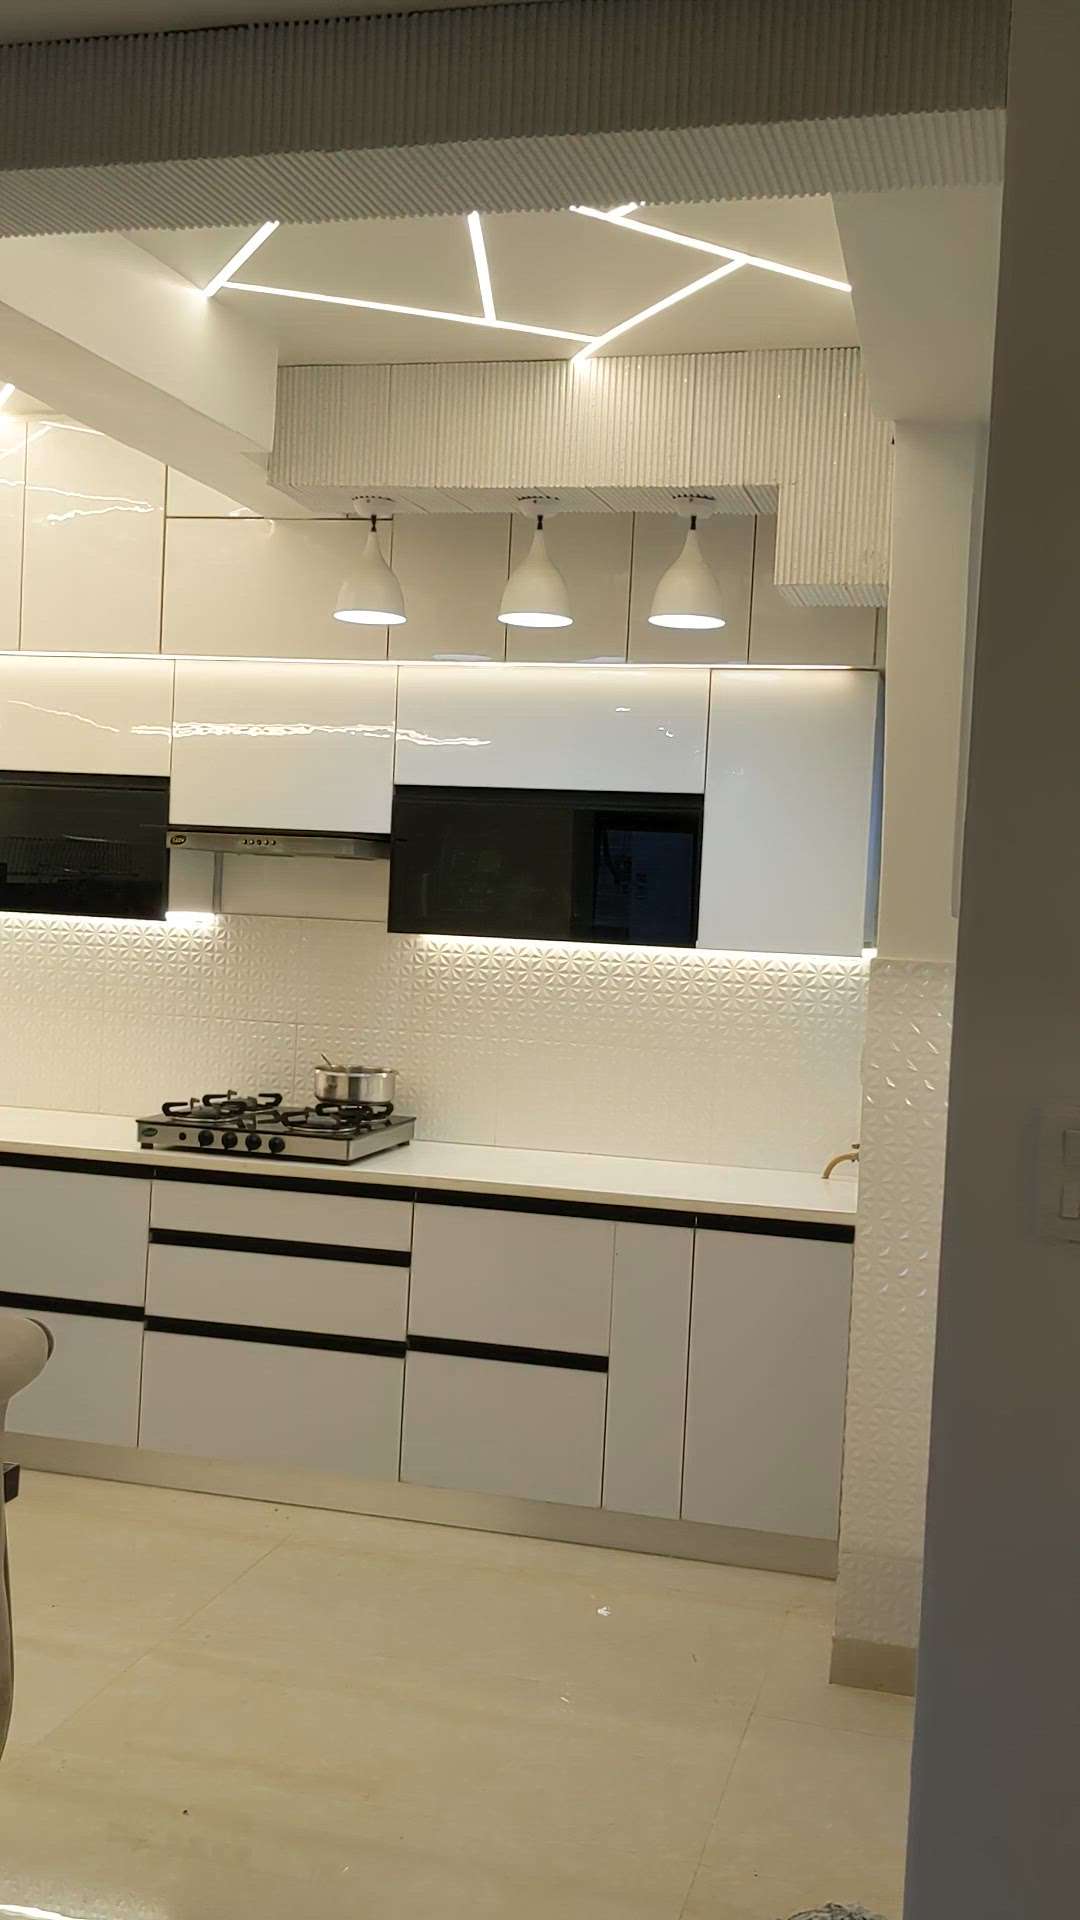 luxury modular kitchen in Acrylic finish with profile light ceiling. # modular kitchen  #buildcraftassociates  #modernkitchenstyle #acrylickitchendesigns  #homeinteriordesign